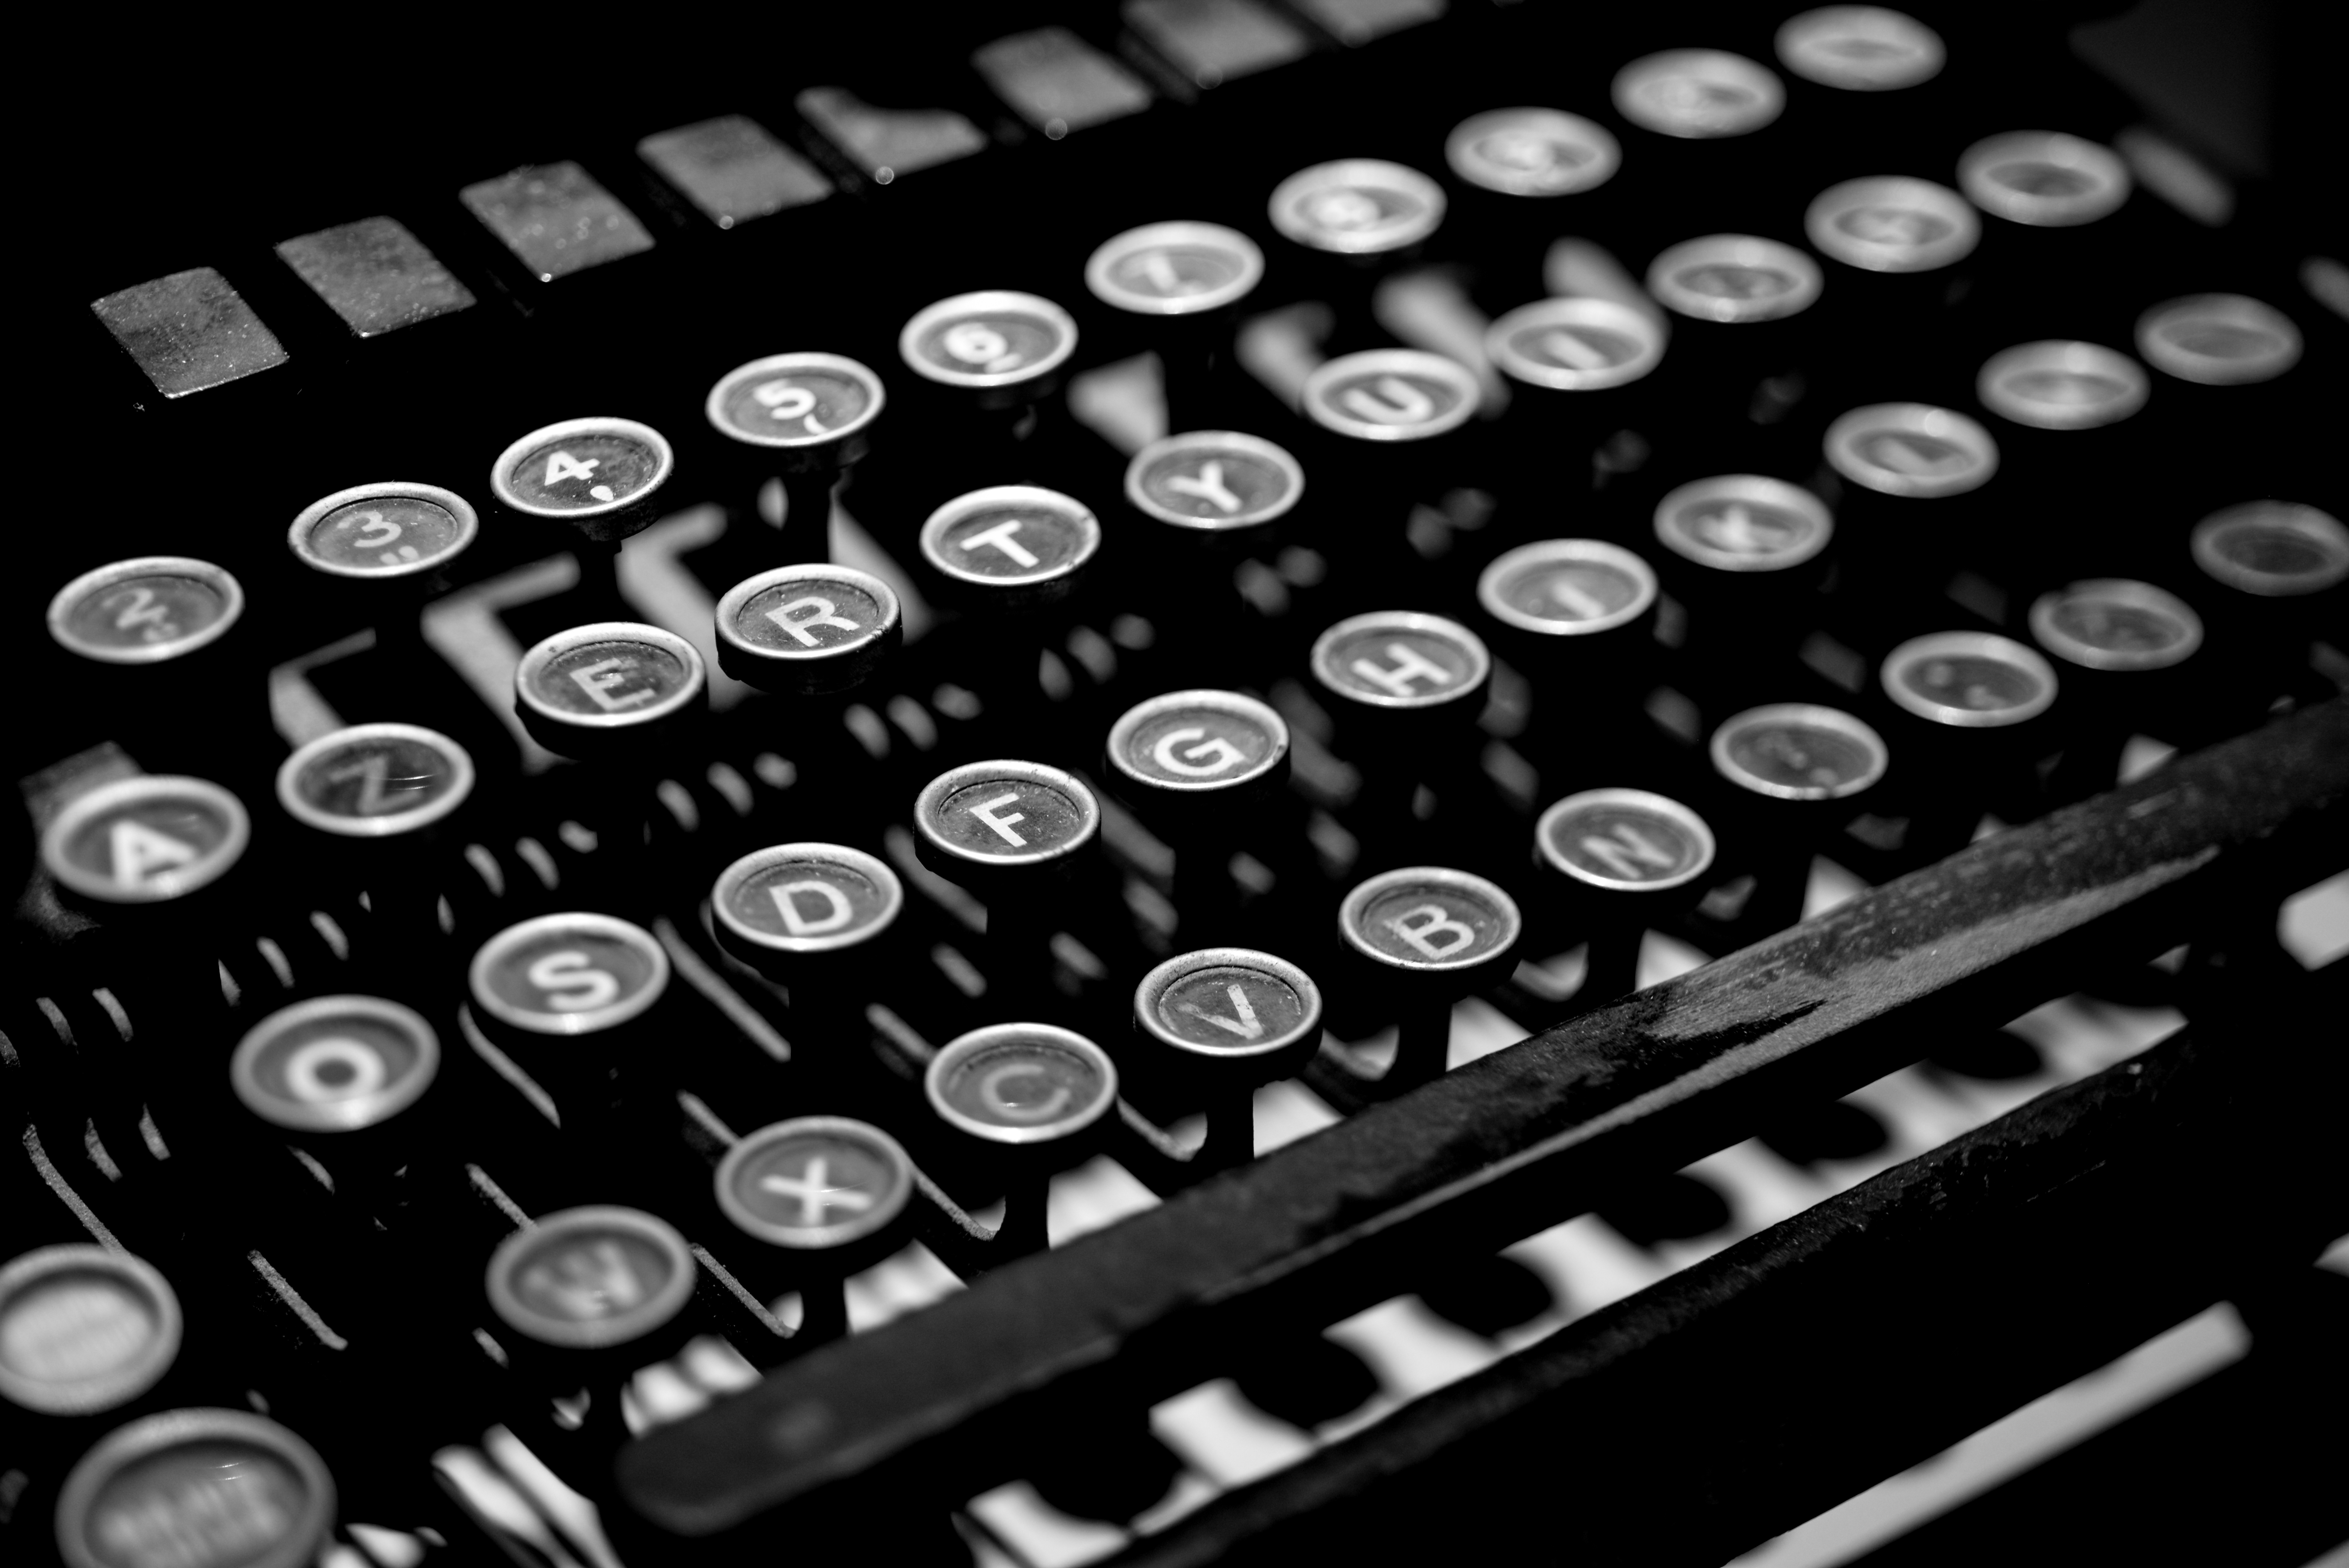 typewriter, miscellaneous, miscellanea, typography, keys, printing house images